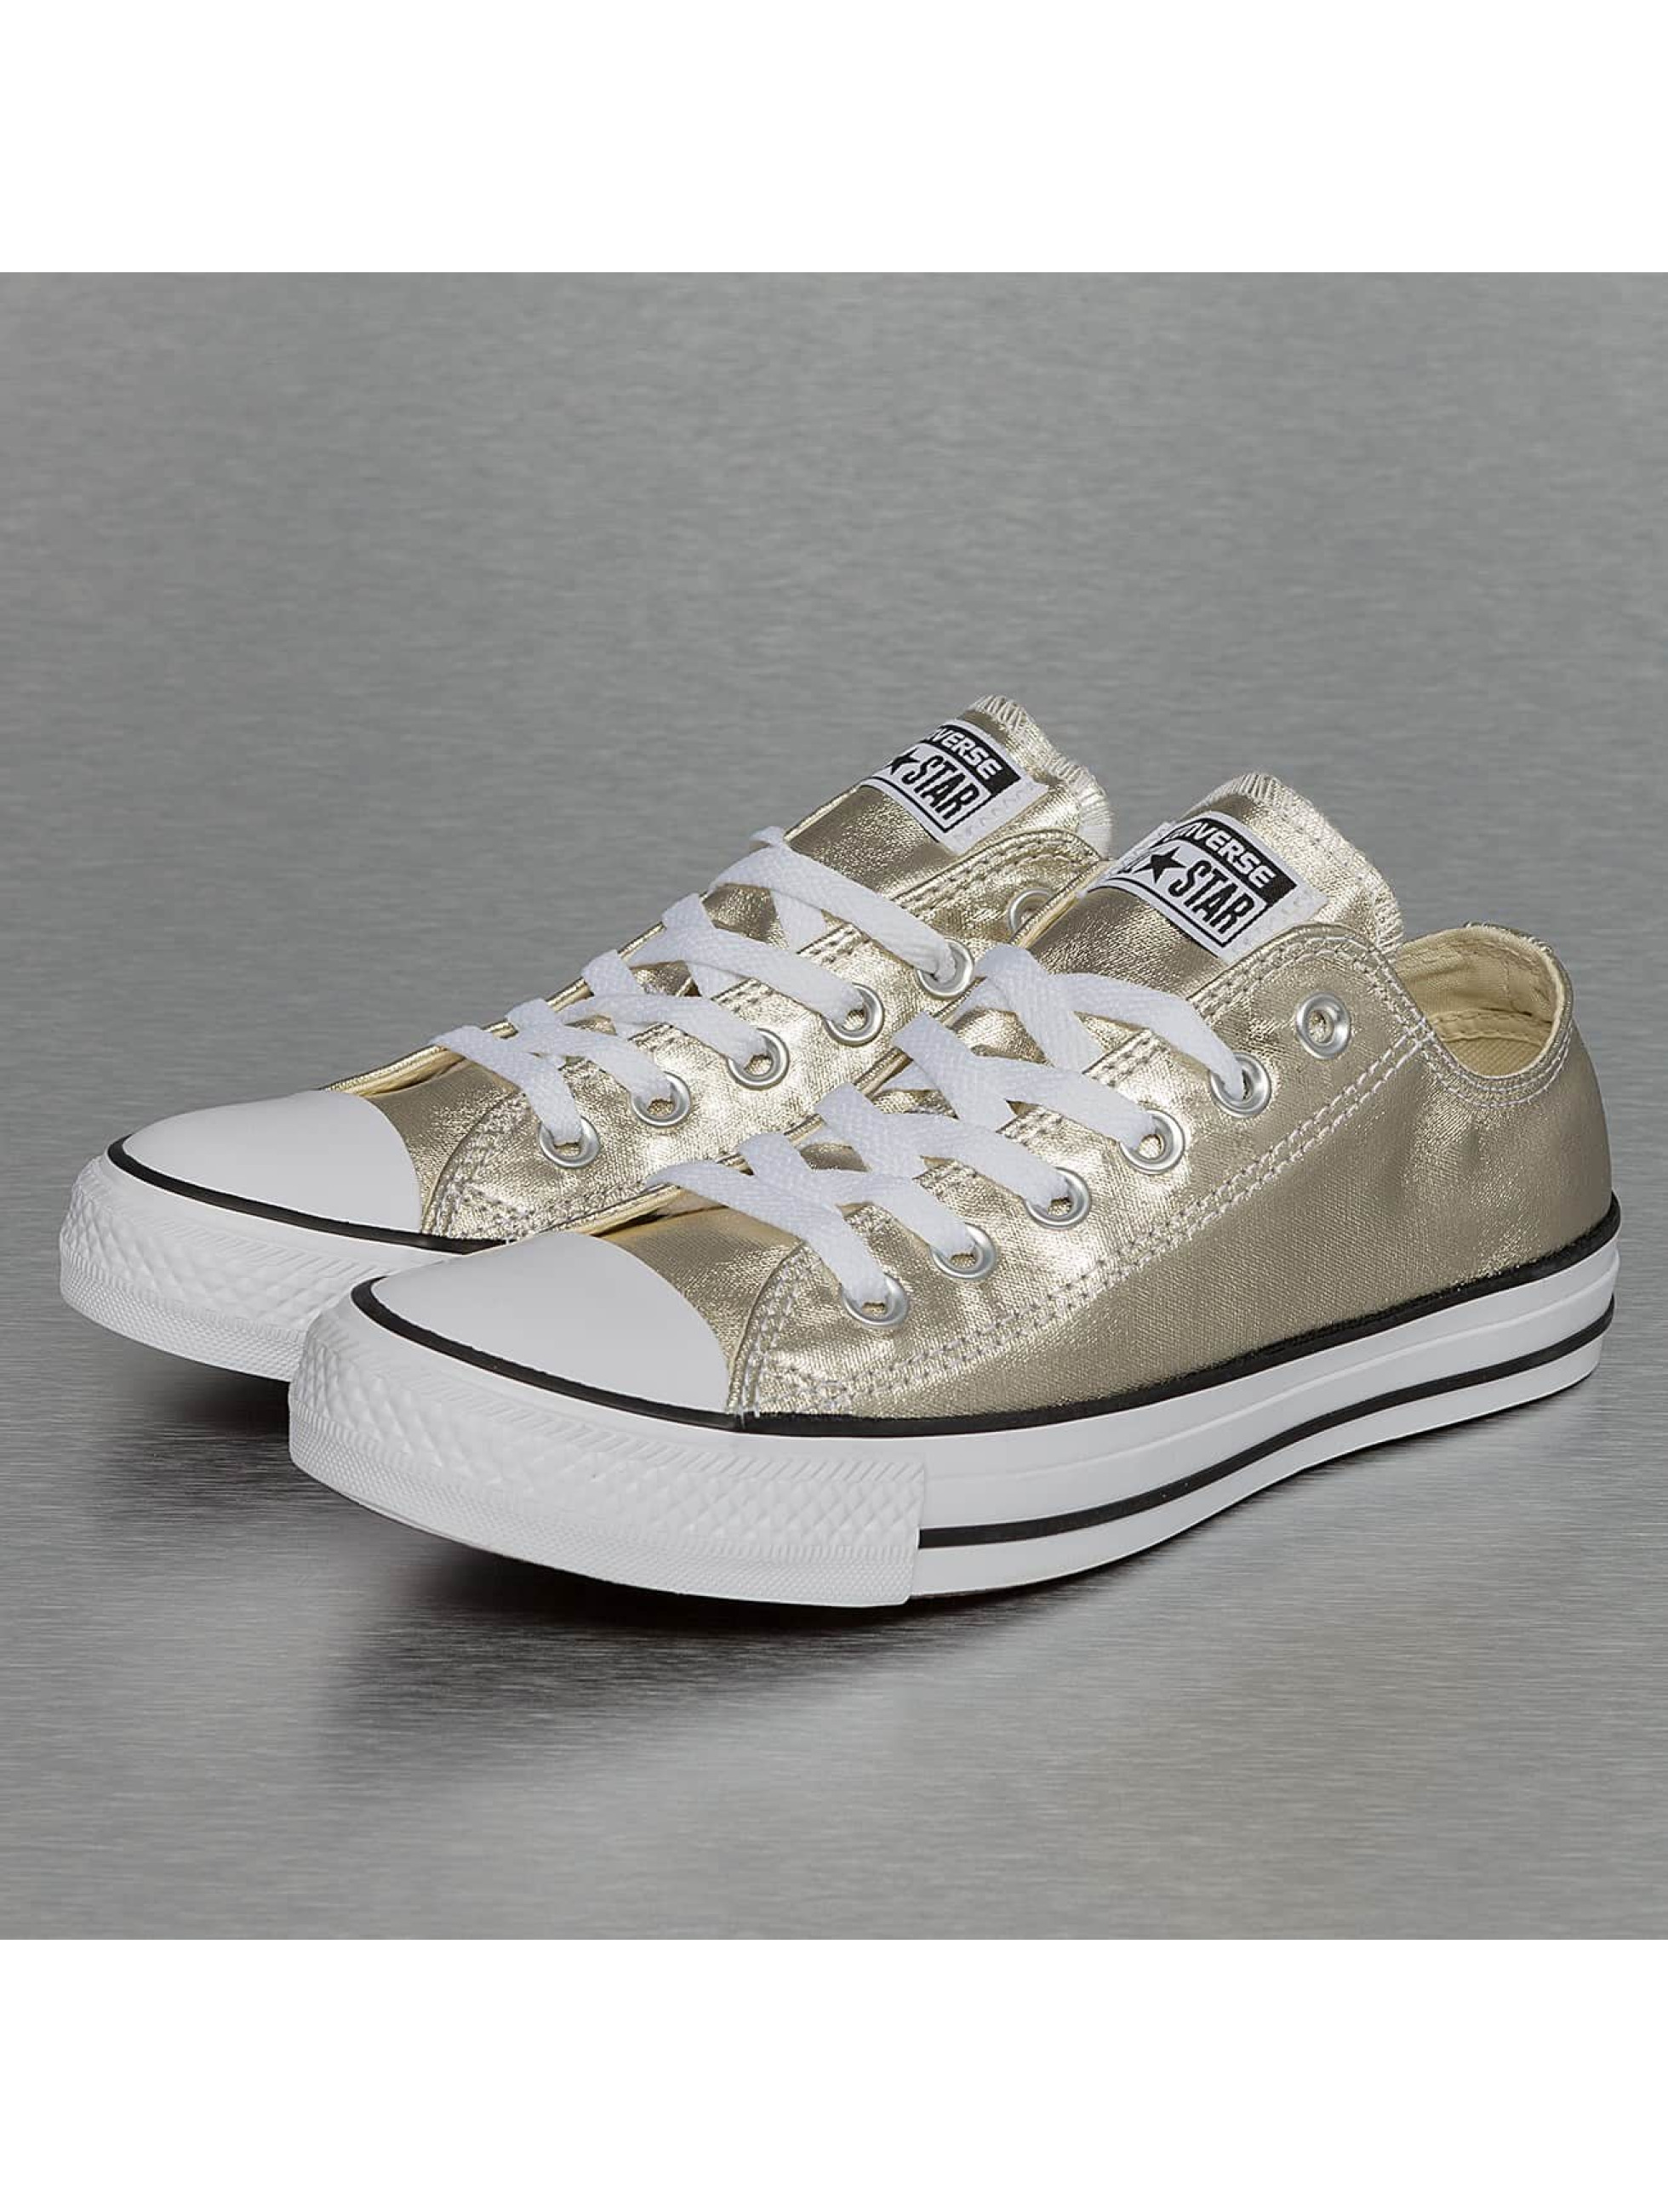 Converse schoen / sneaker Chuck Taylor All Star in goud